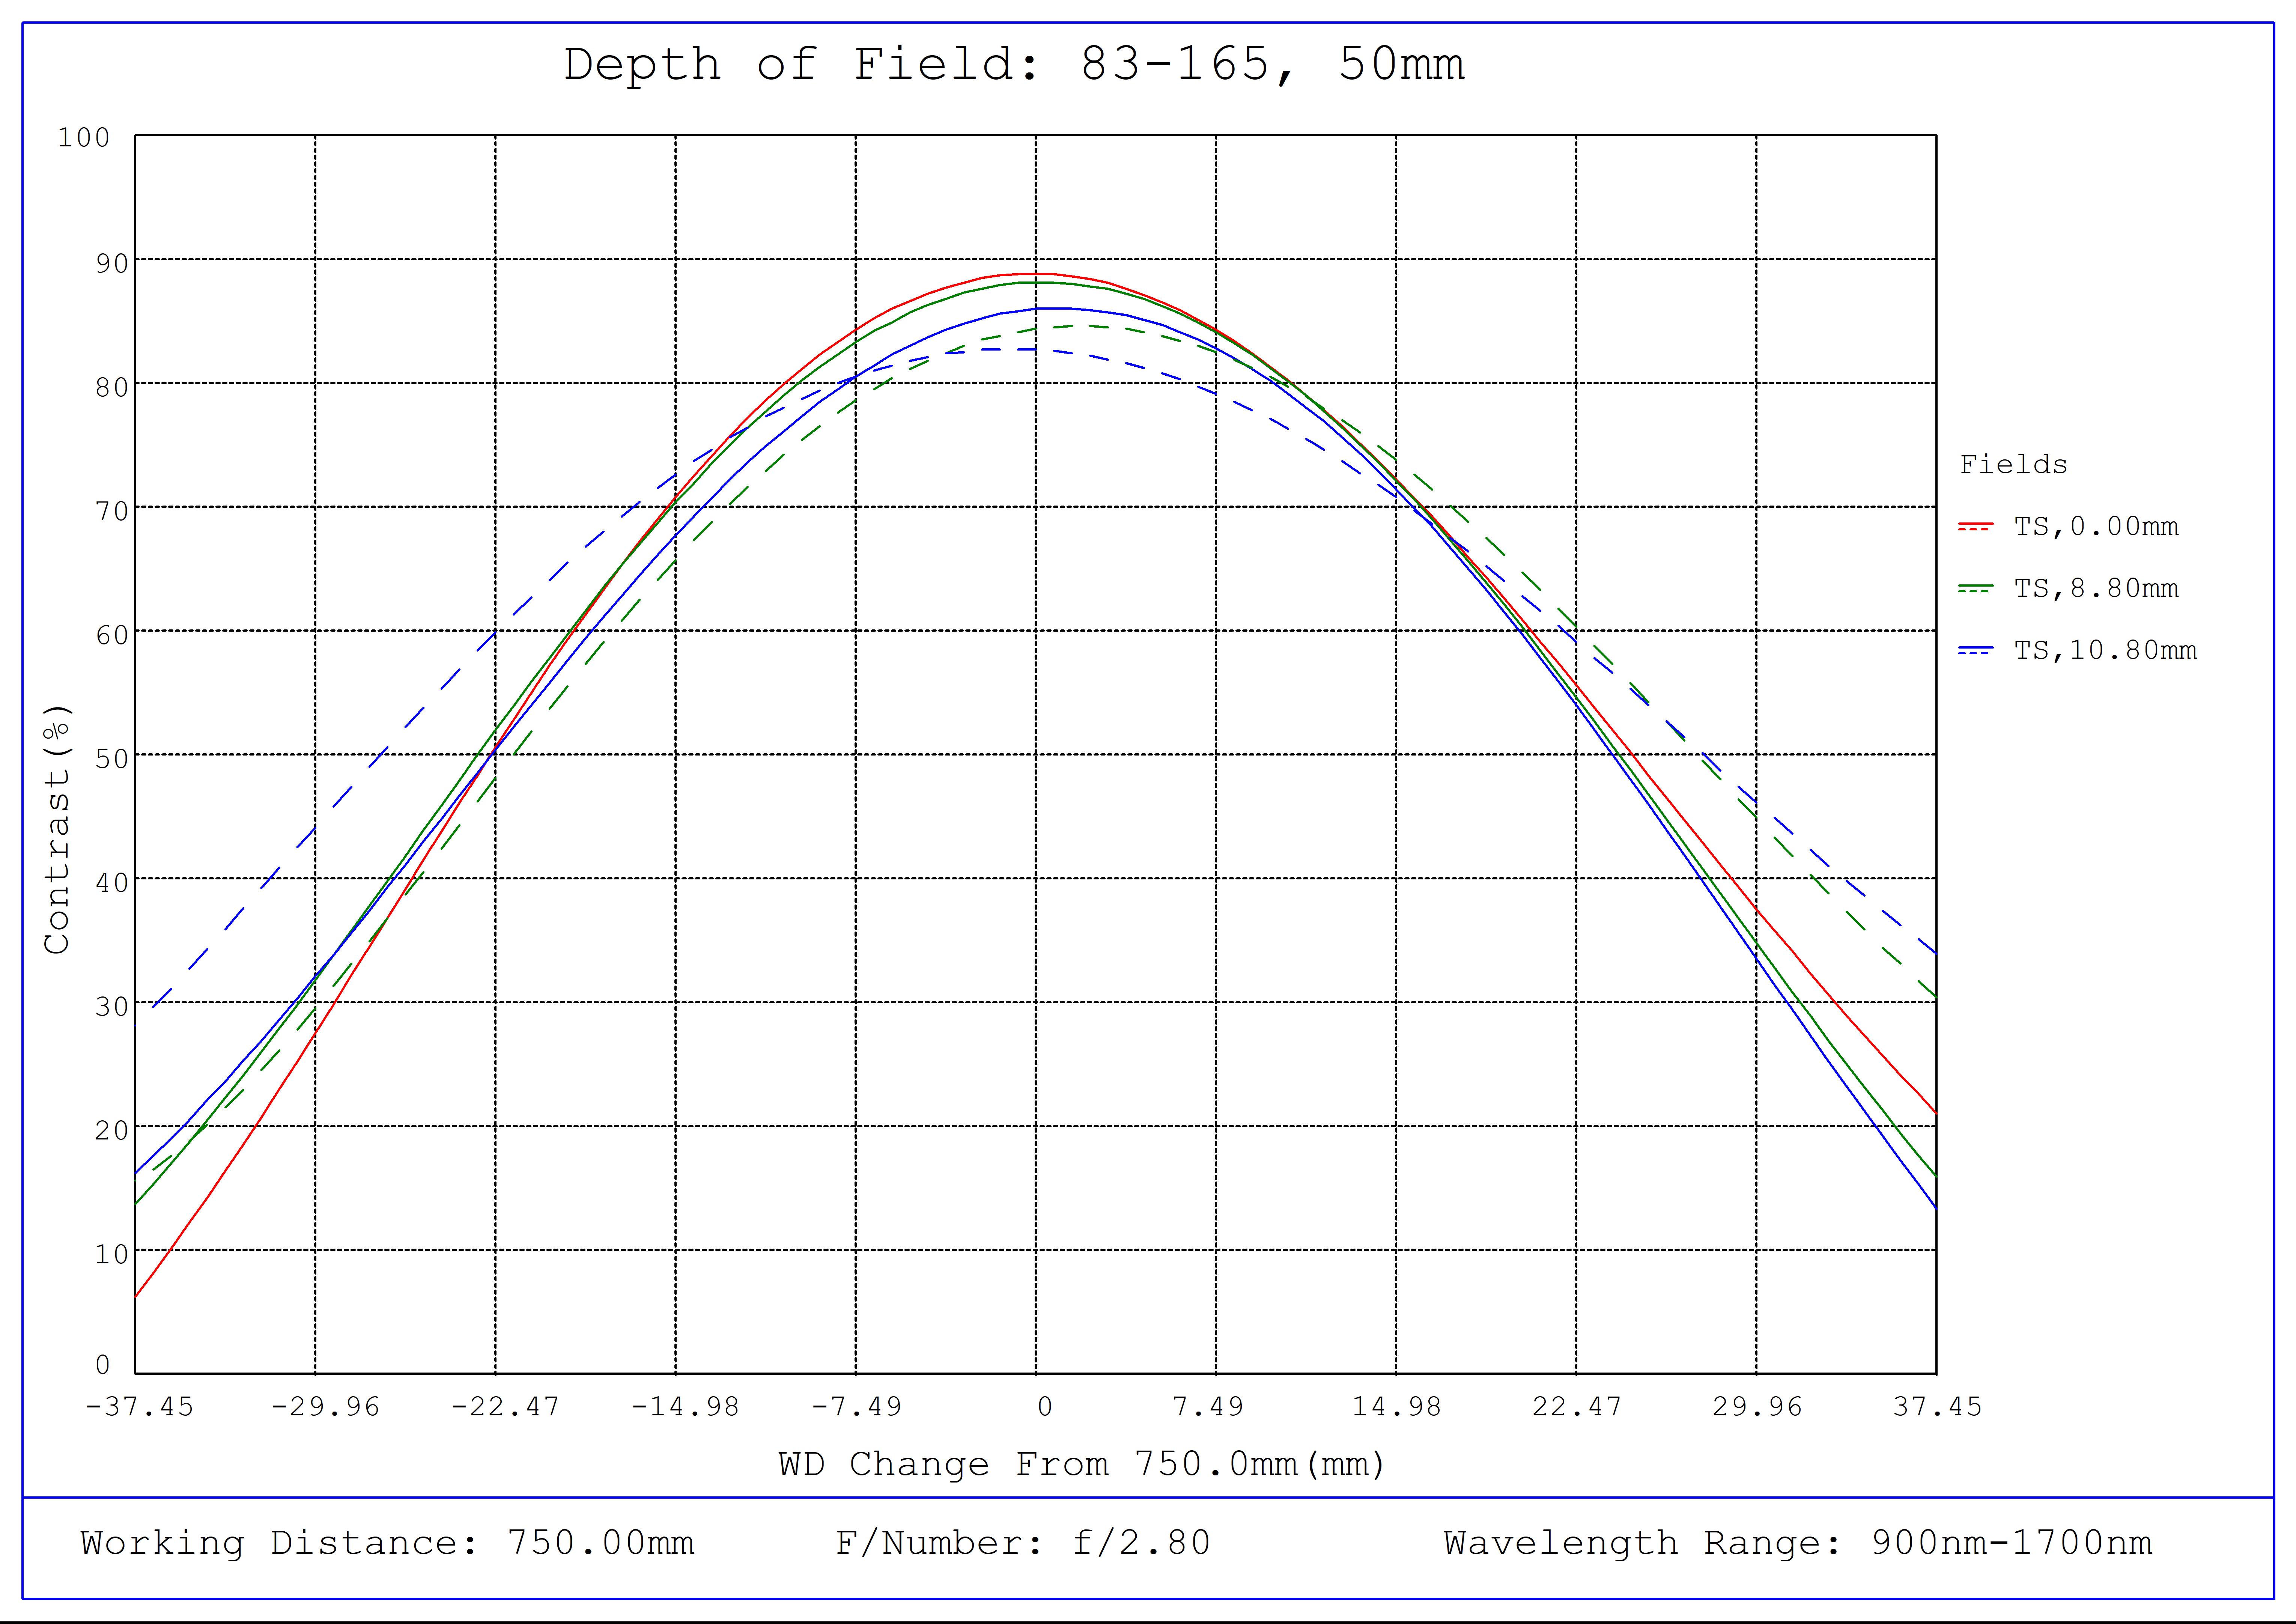 #83-165, 50mm SWIR Series Fixed Focal Length Lens, C-Mount, Depth of Field Plot, 750mm Working Distance, f2.8